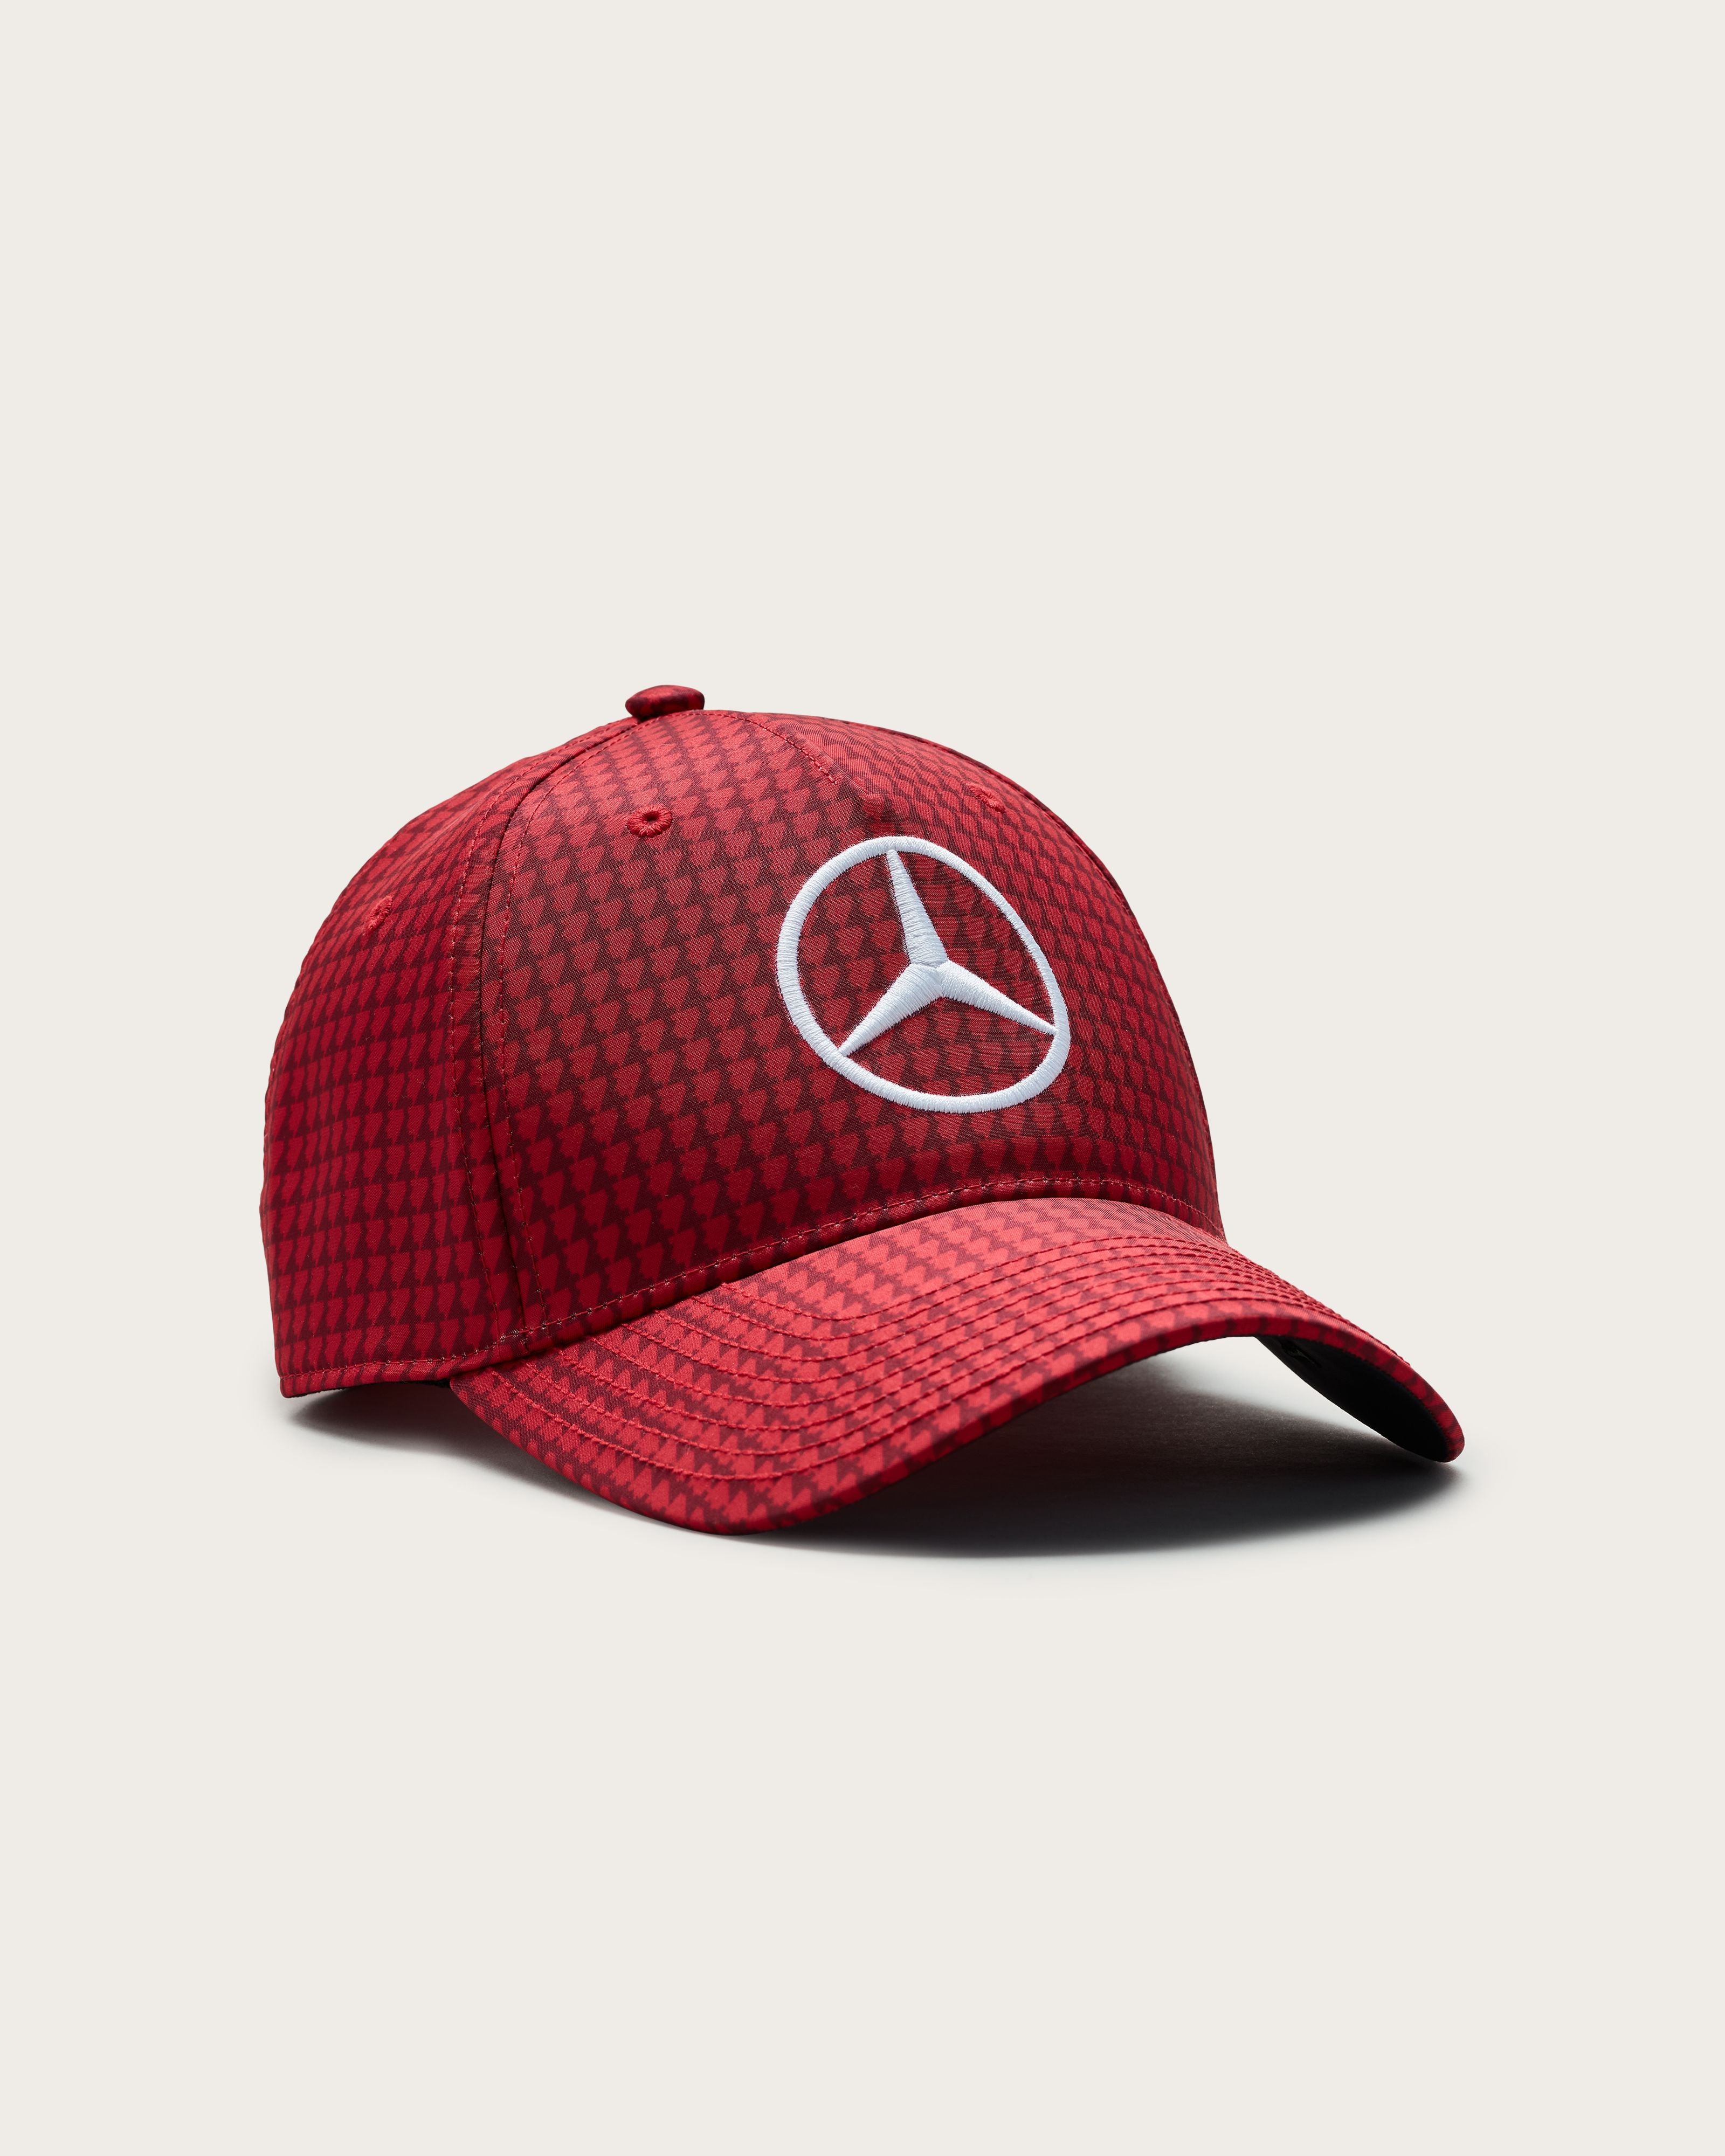 Mercedes F1 Team Merchandise Official Mercedes-AMG F1 Store